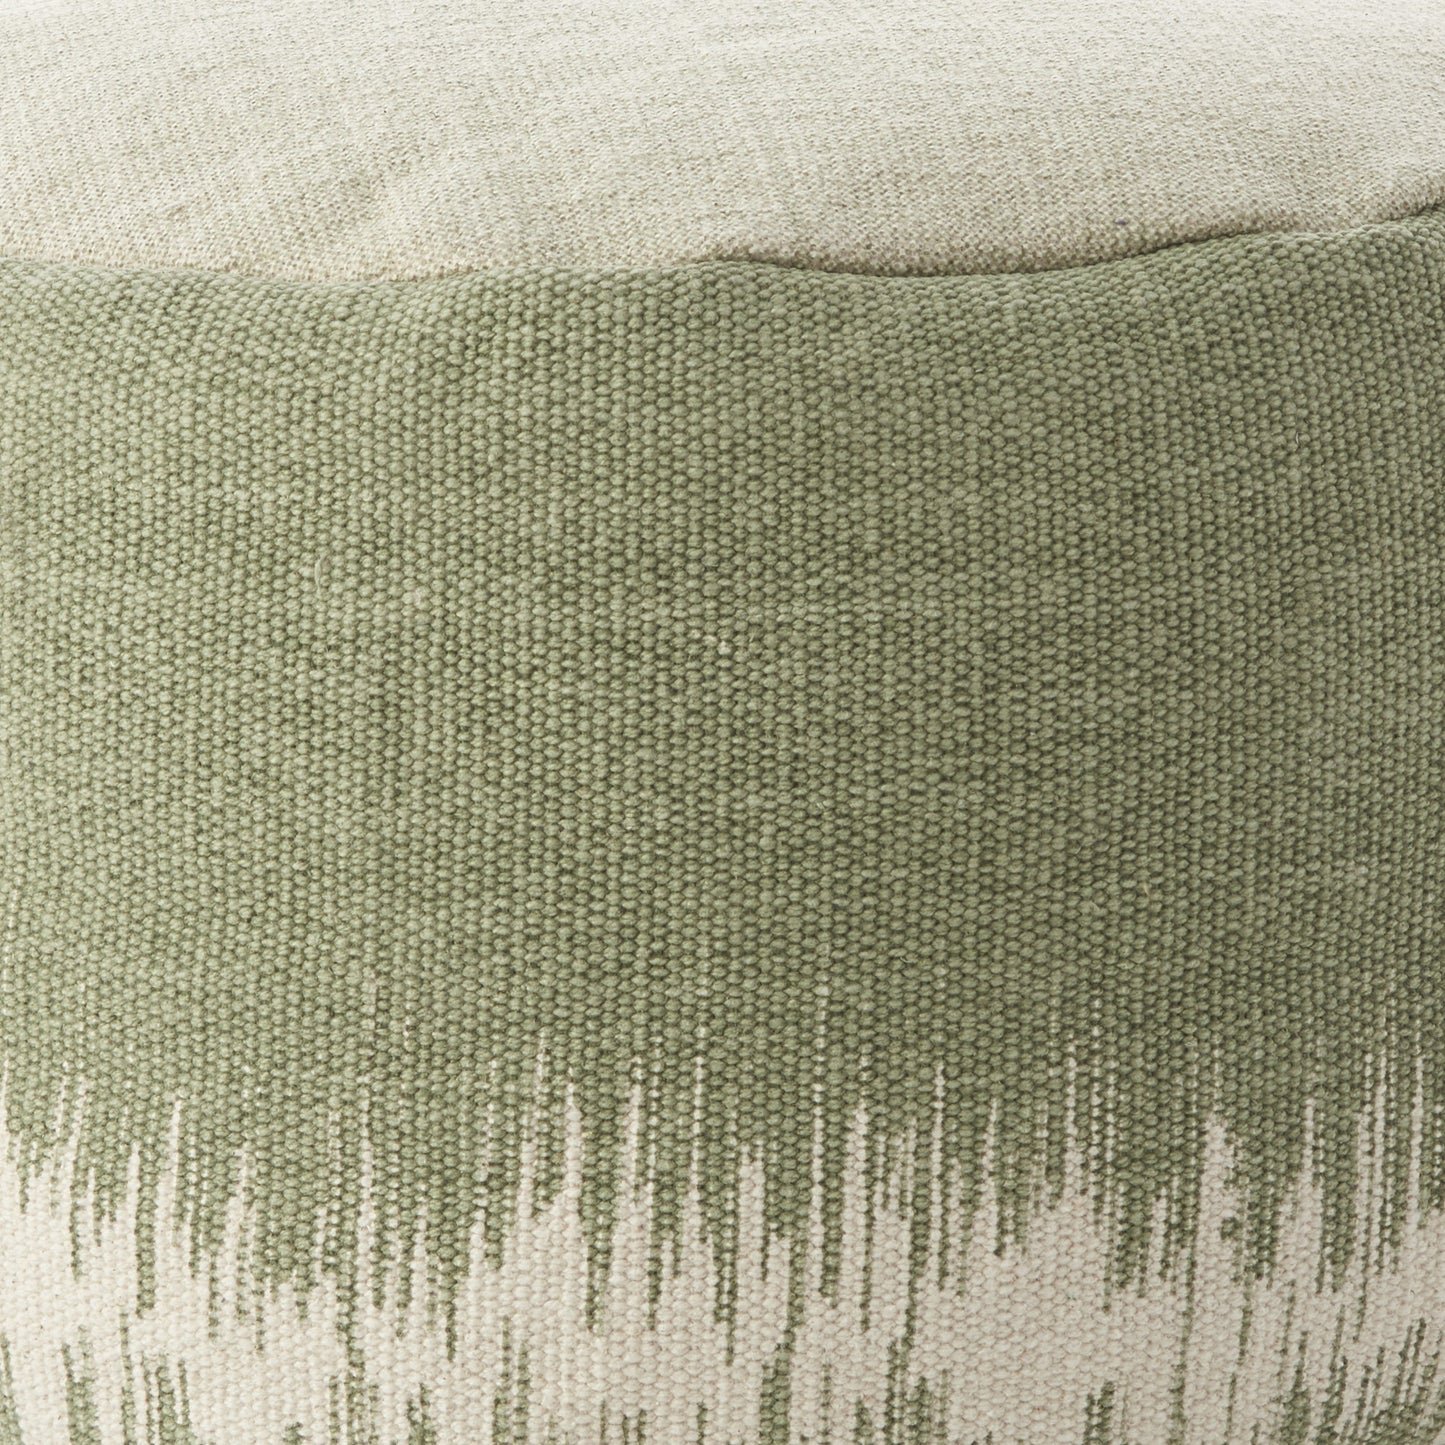 20" Green and White Cotton Round Abstract Pouf Ottoman